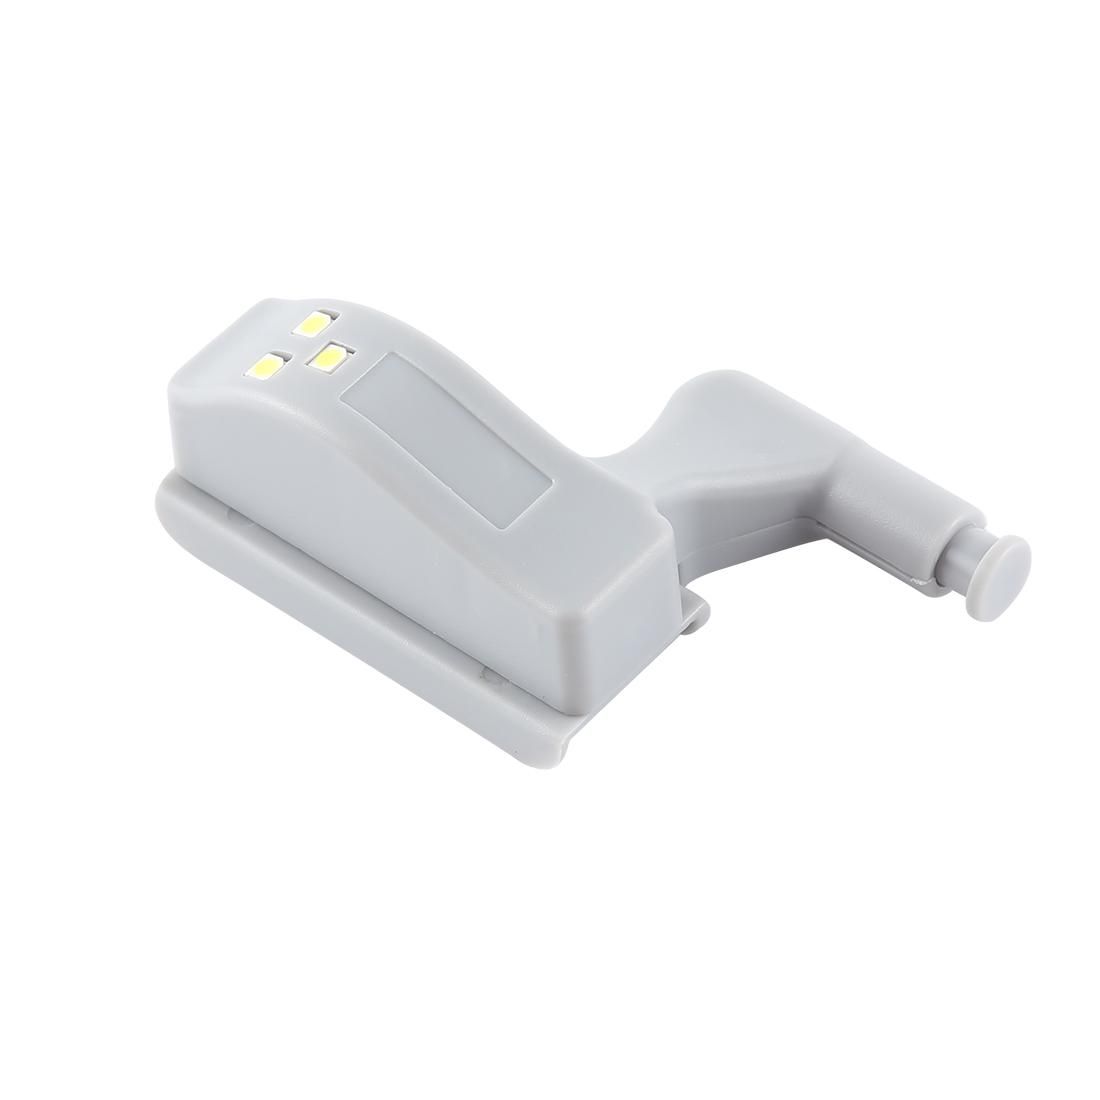 0.3W Universal Inner Hinge LED Sensor lamp Cupboard 3 LEDs Night light Auto ON/OFF Bulb (Warm White)